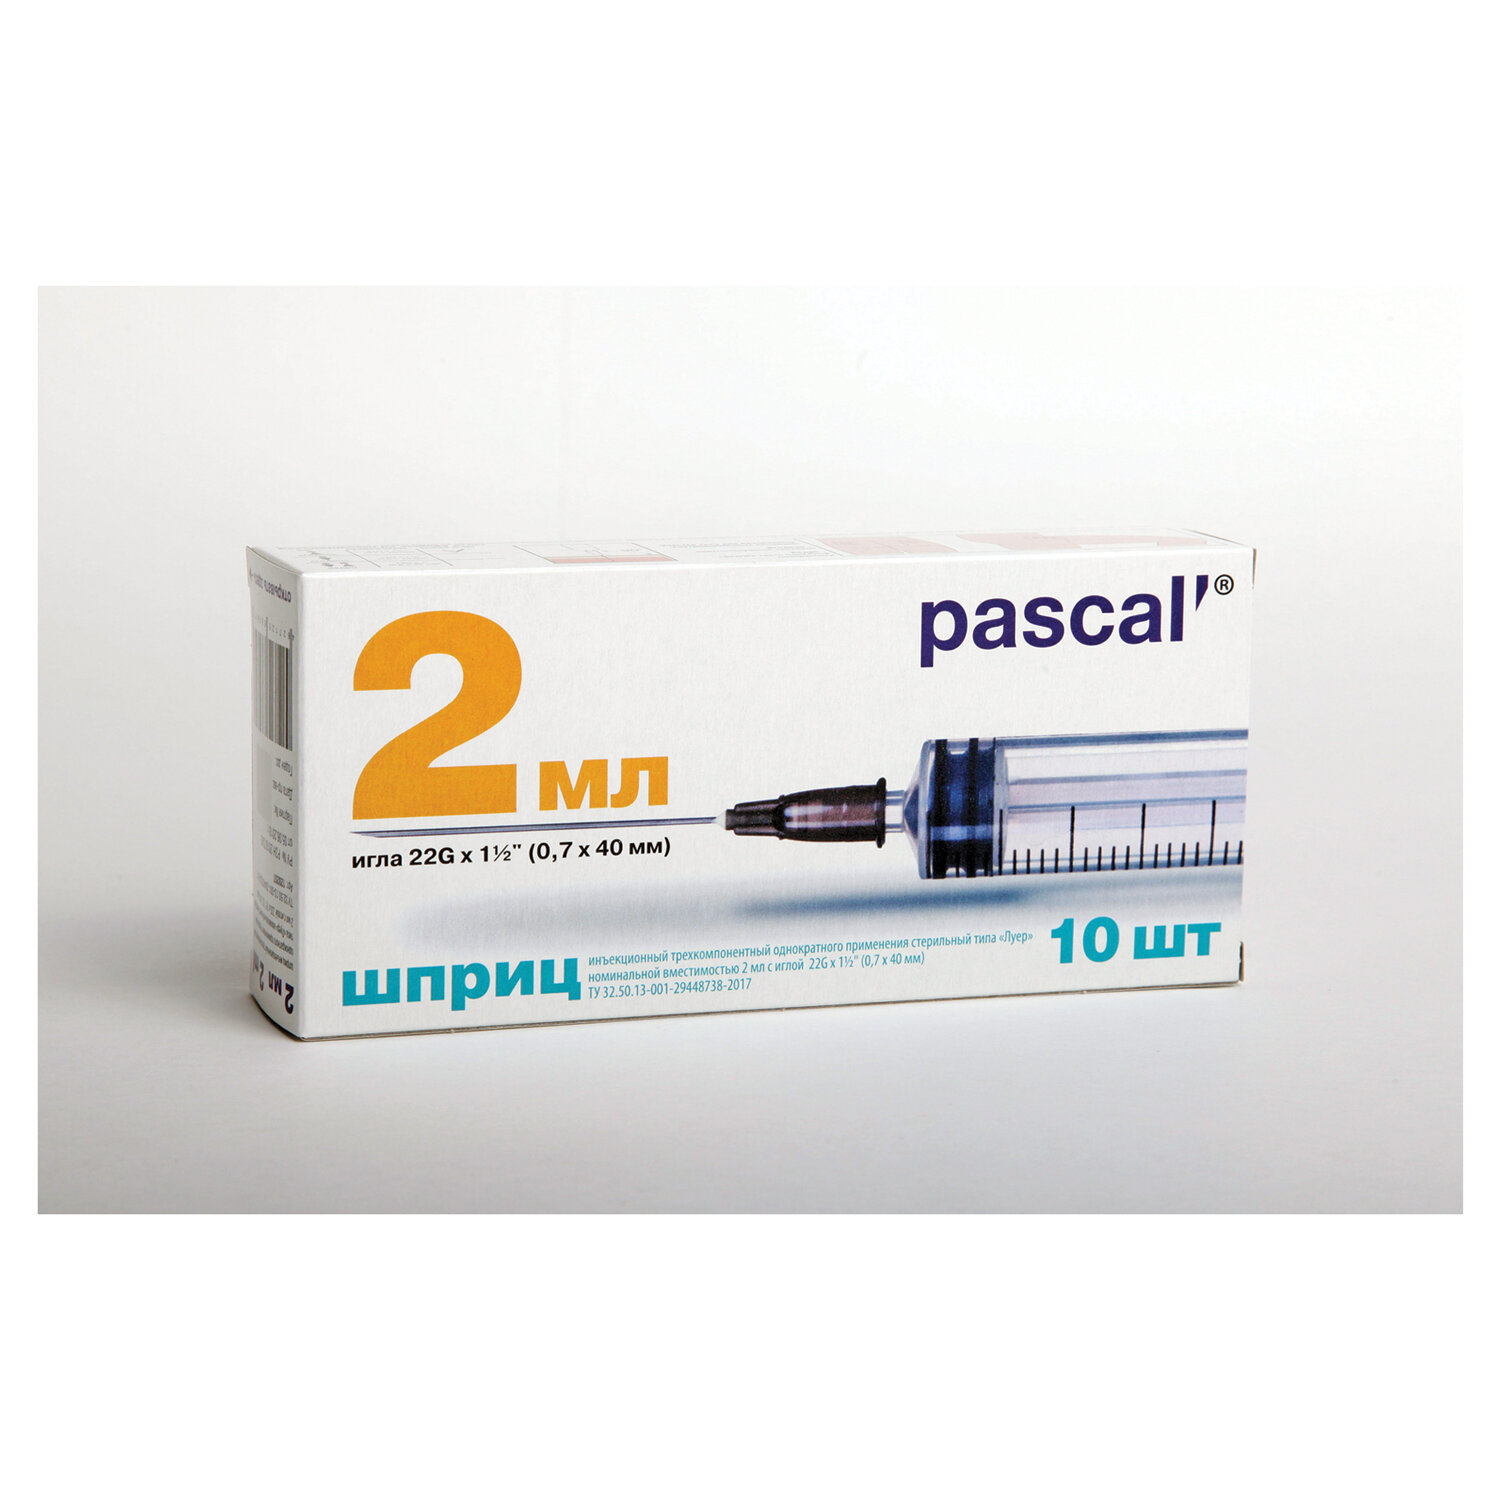 Шприц 3-х компонентный PASCAL 120207, 2 мл, 22G, комплект 15 упаковок по 10 шт.